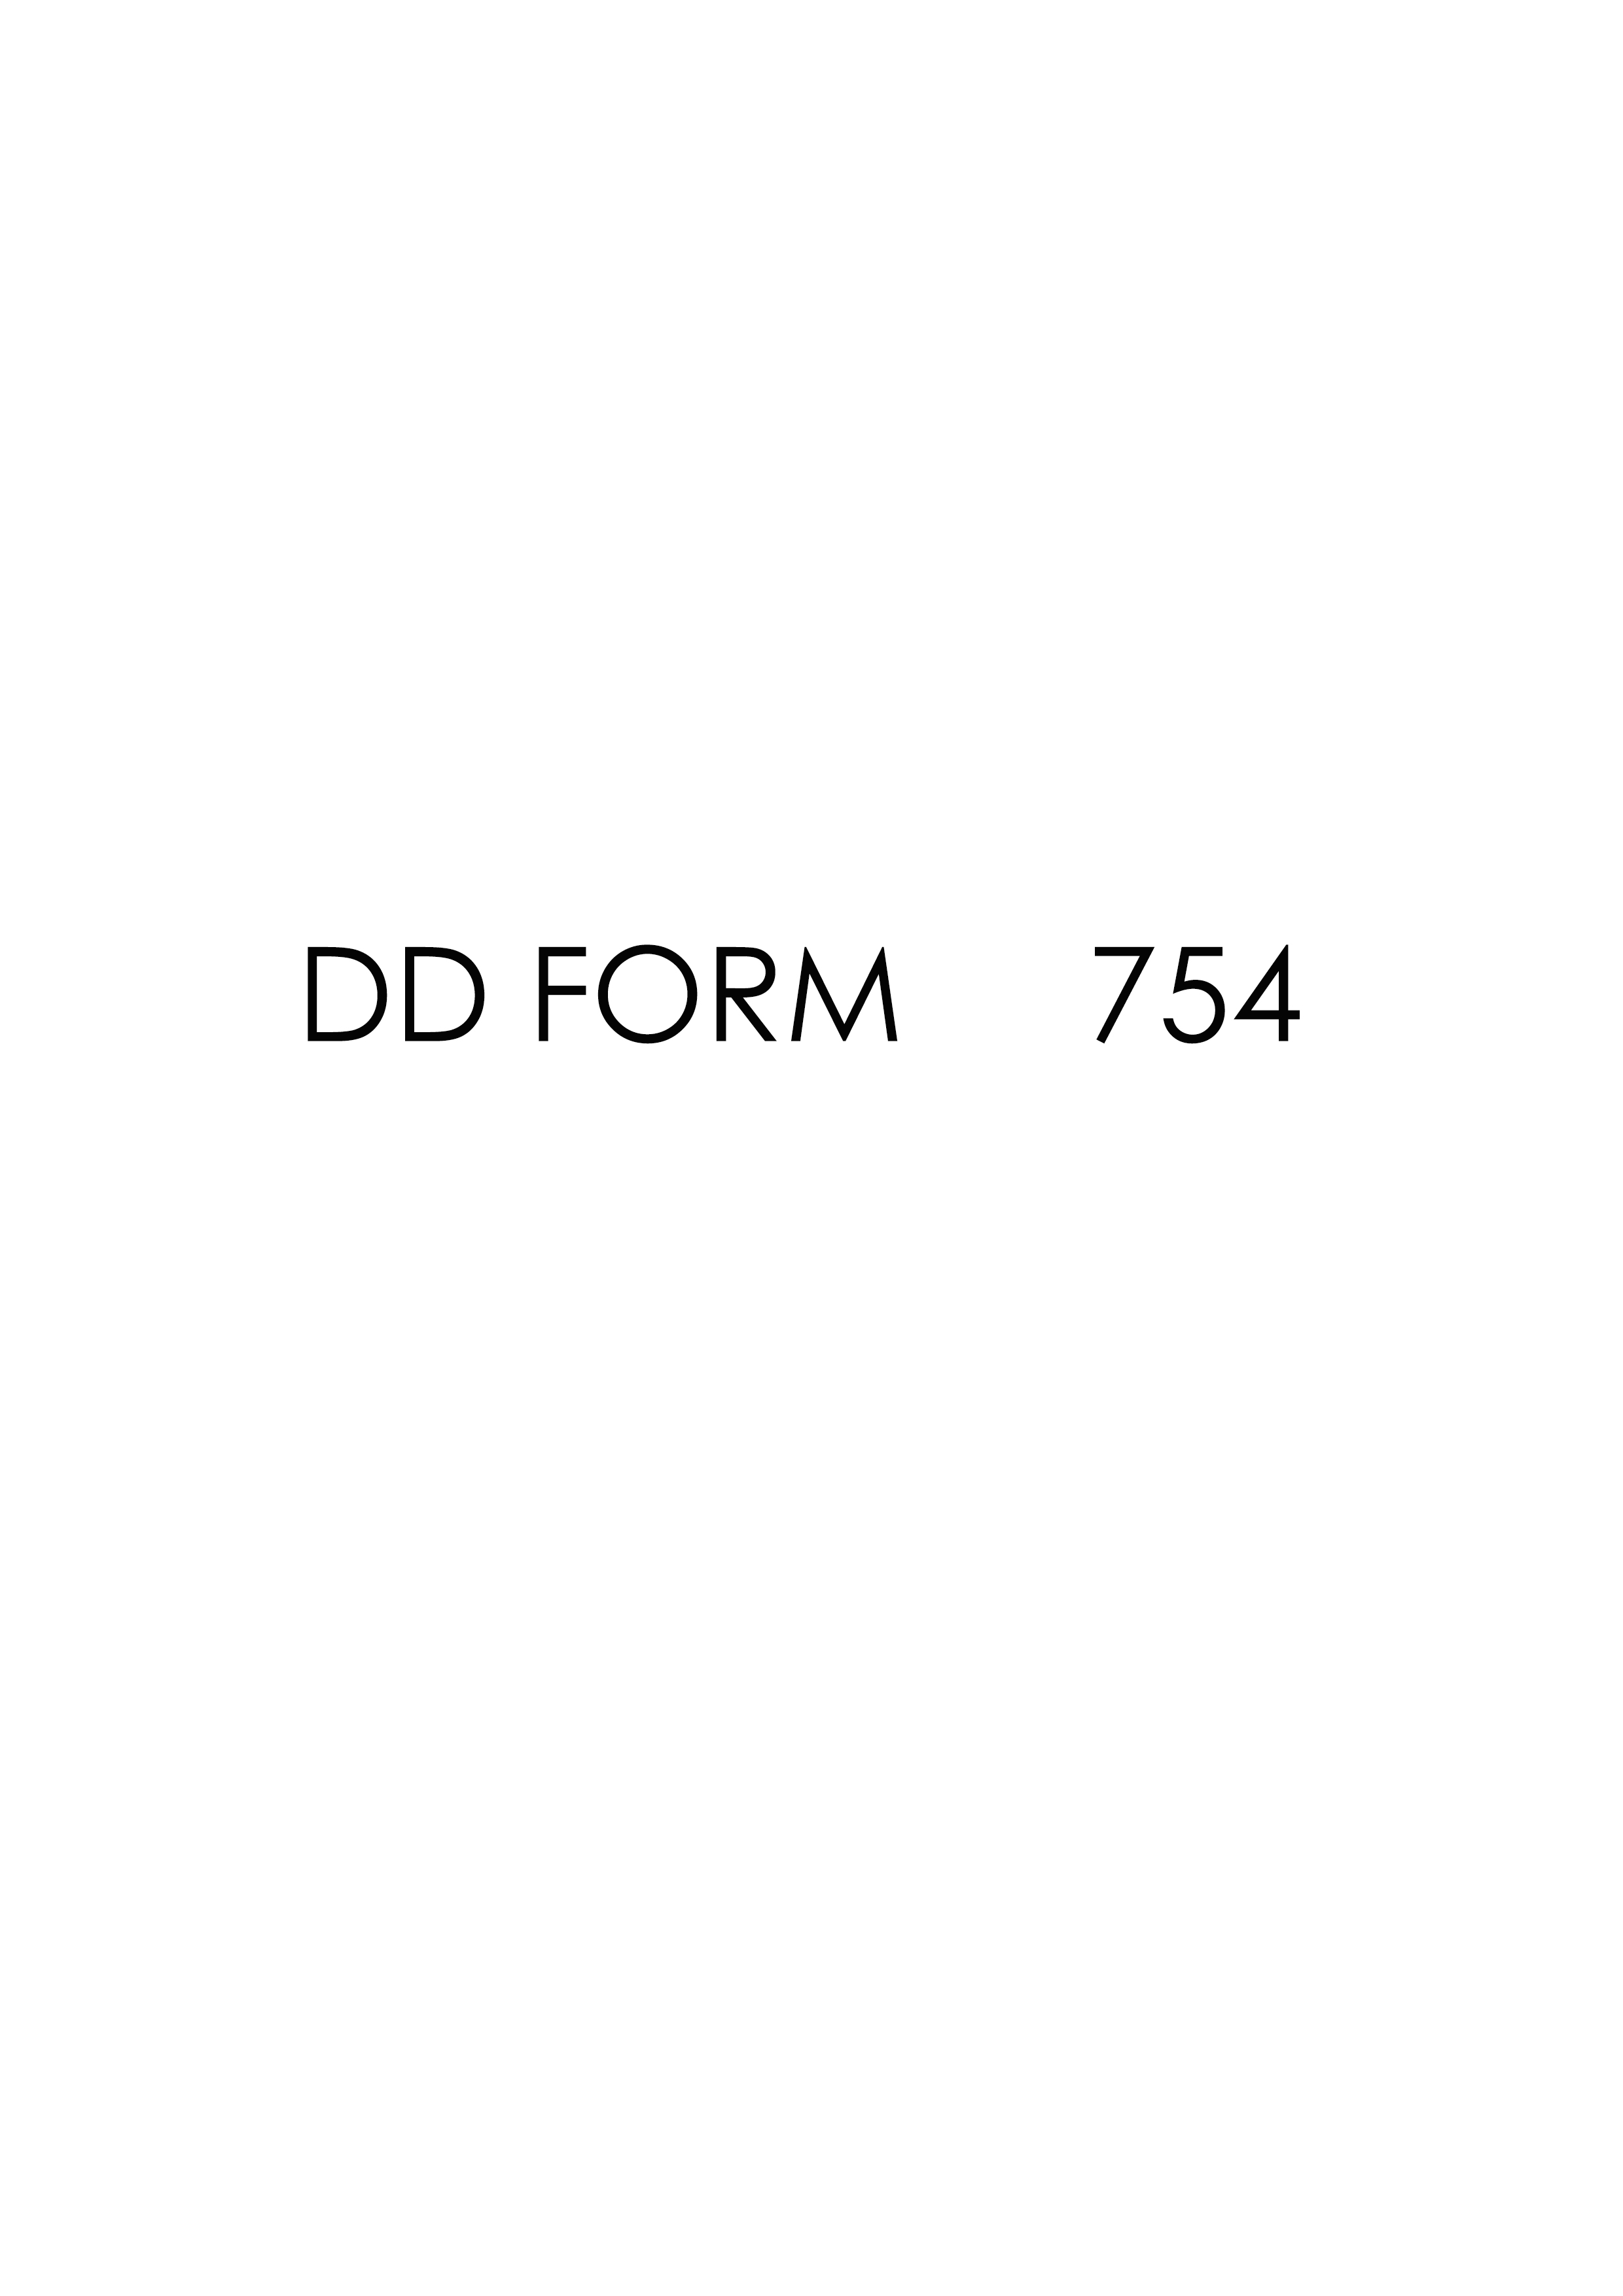 Download dd form 754